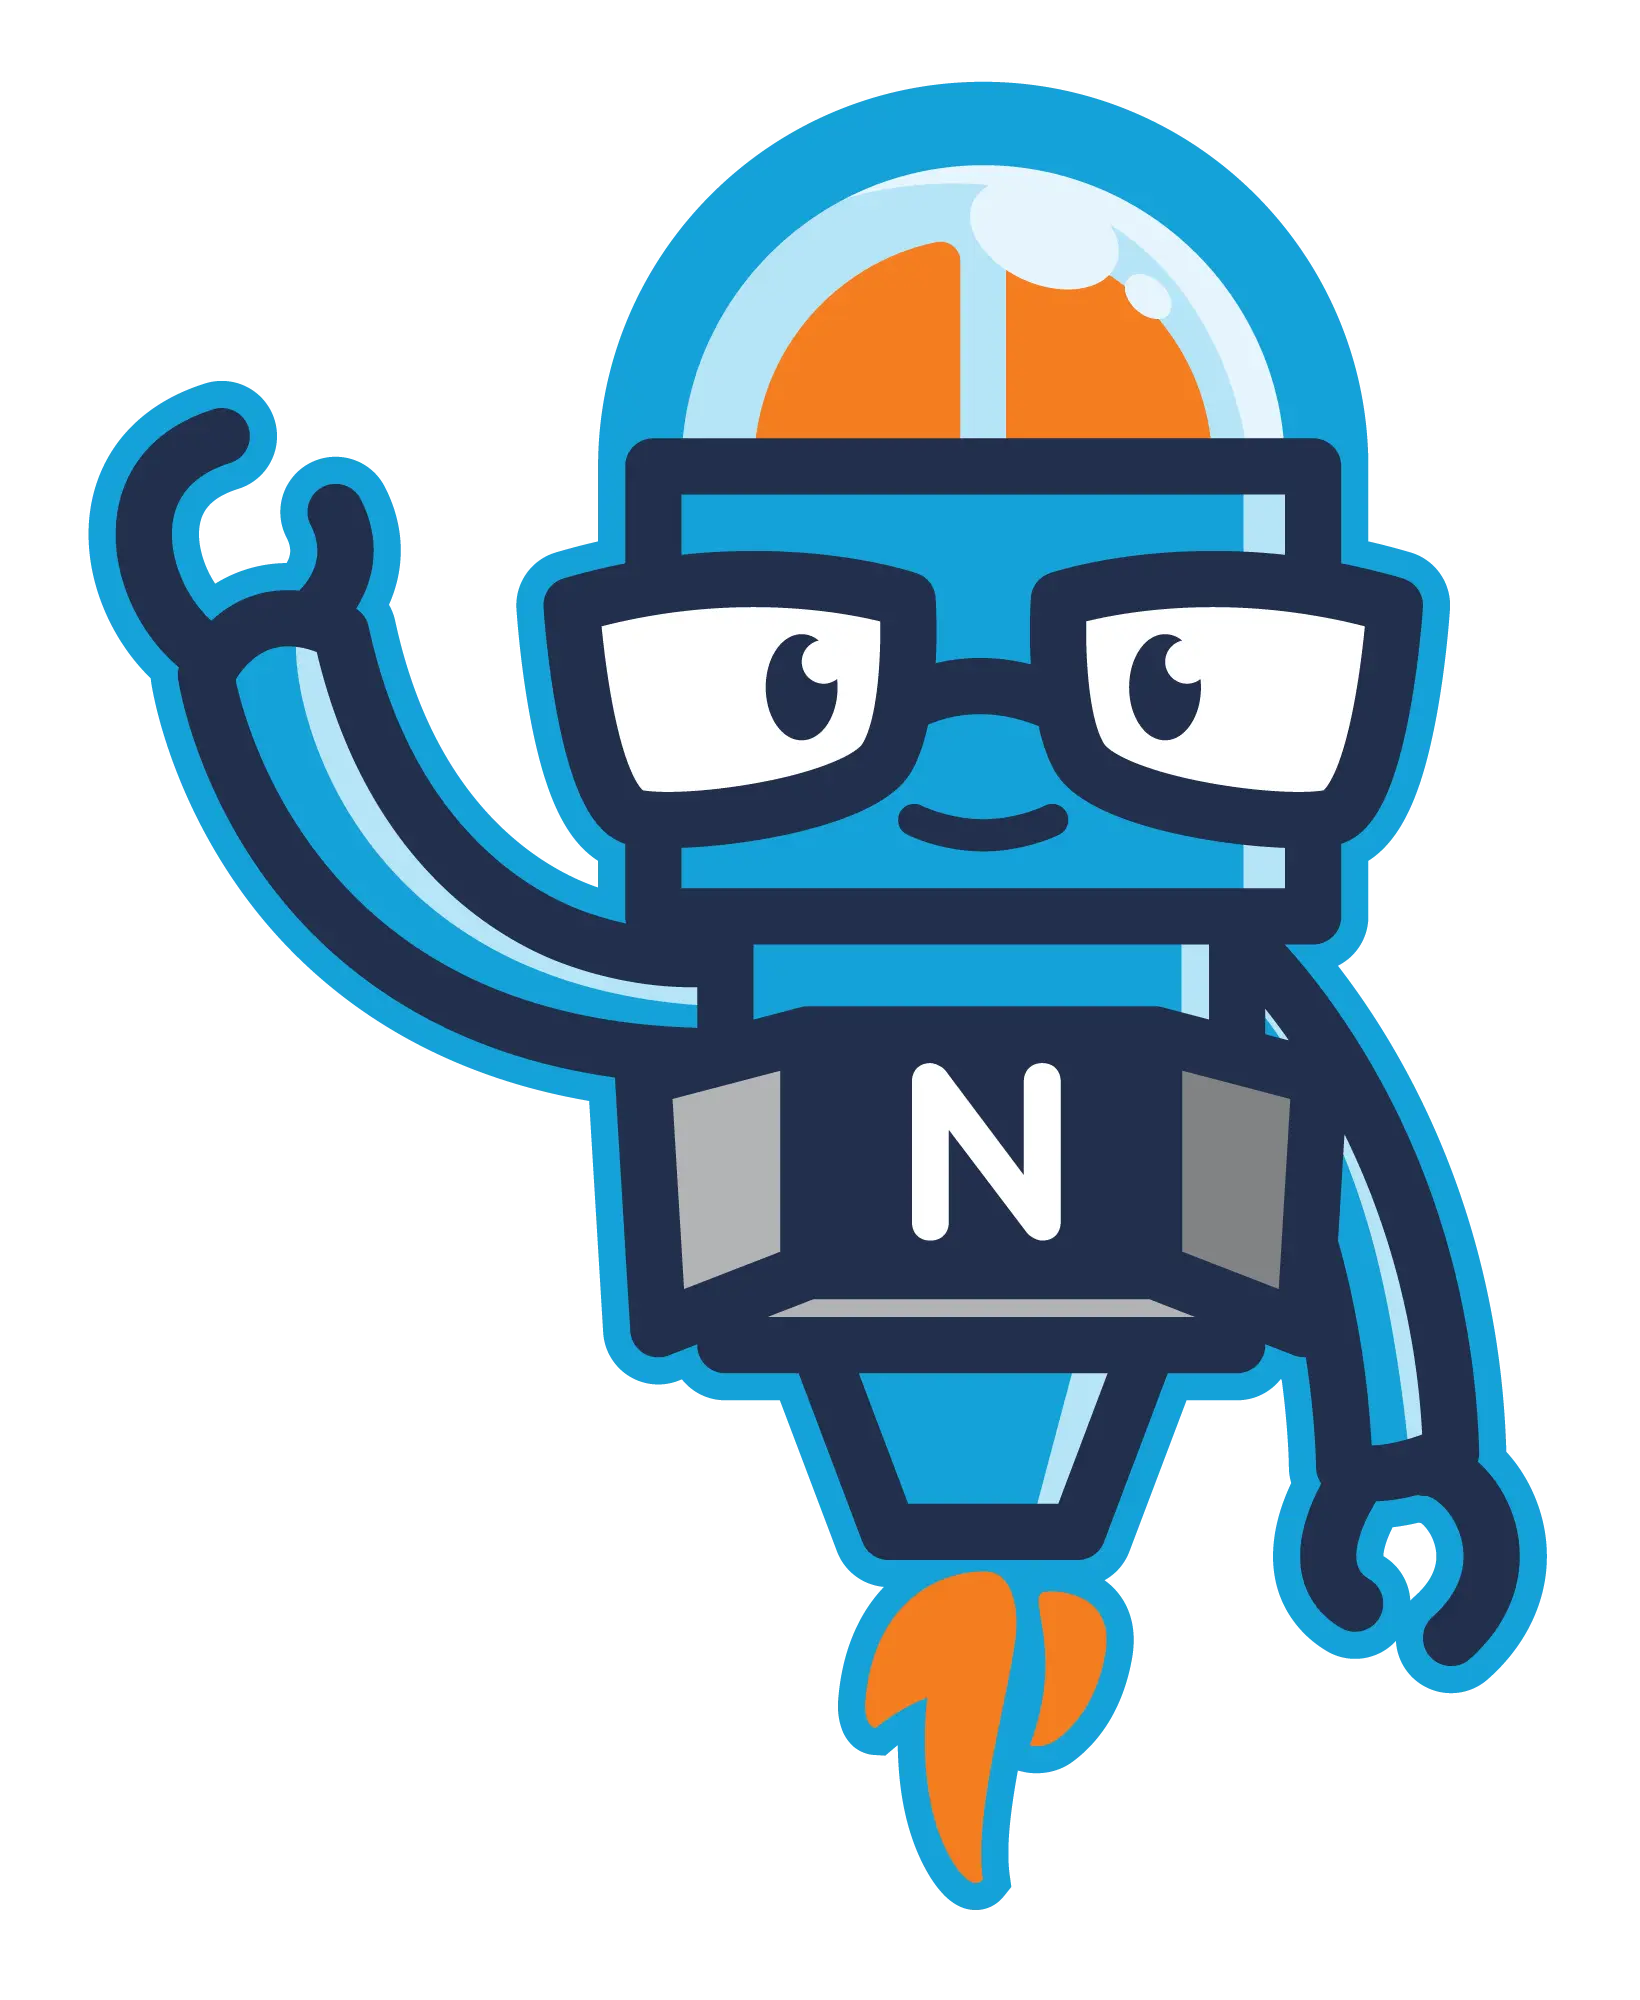 Noodle Intranet Software Mascot
